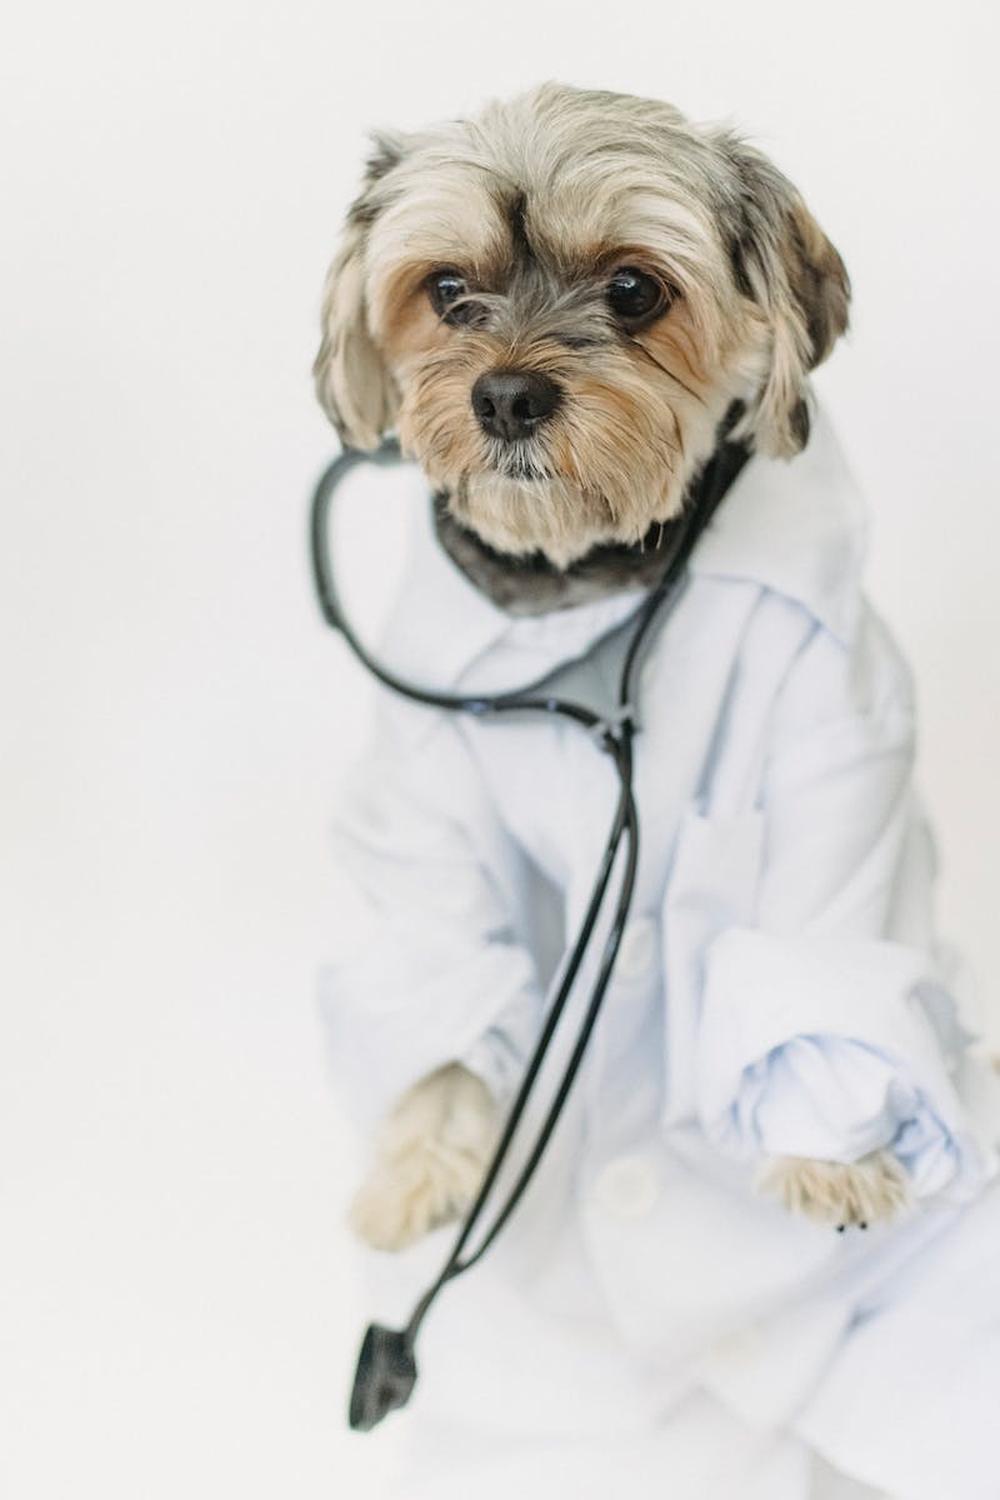  little_dog_in_medical_uniform_in_light_studio